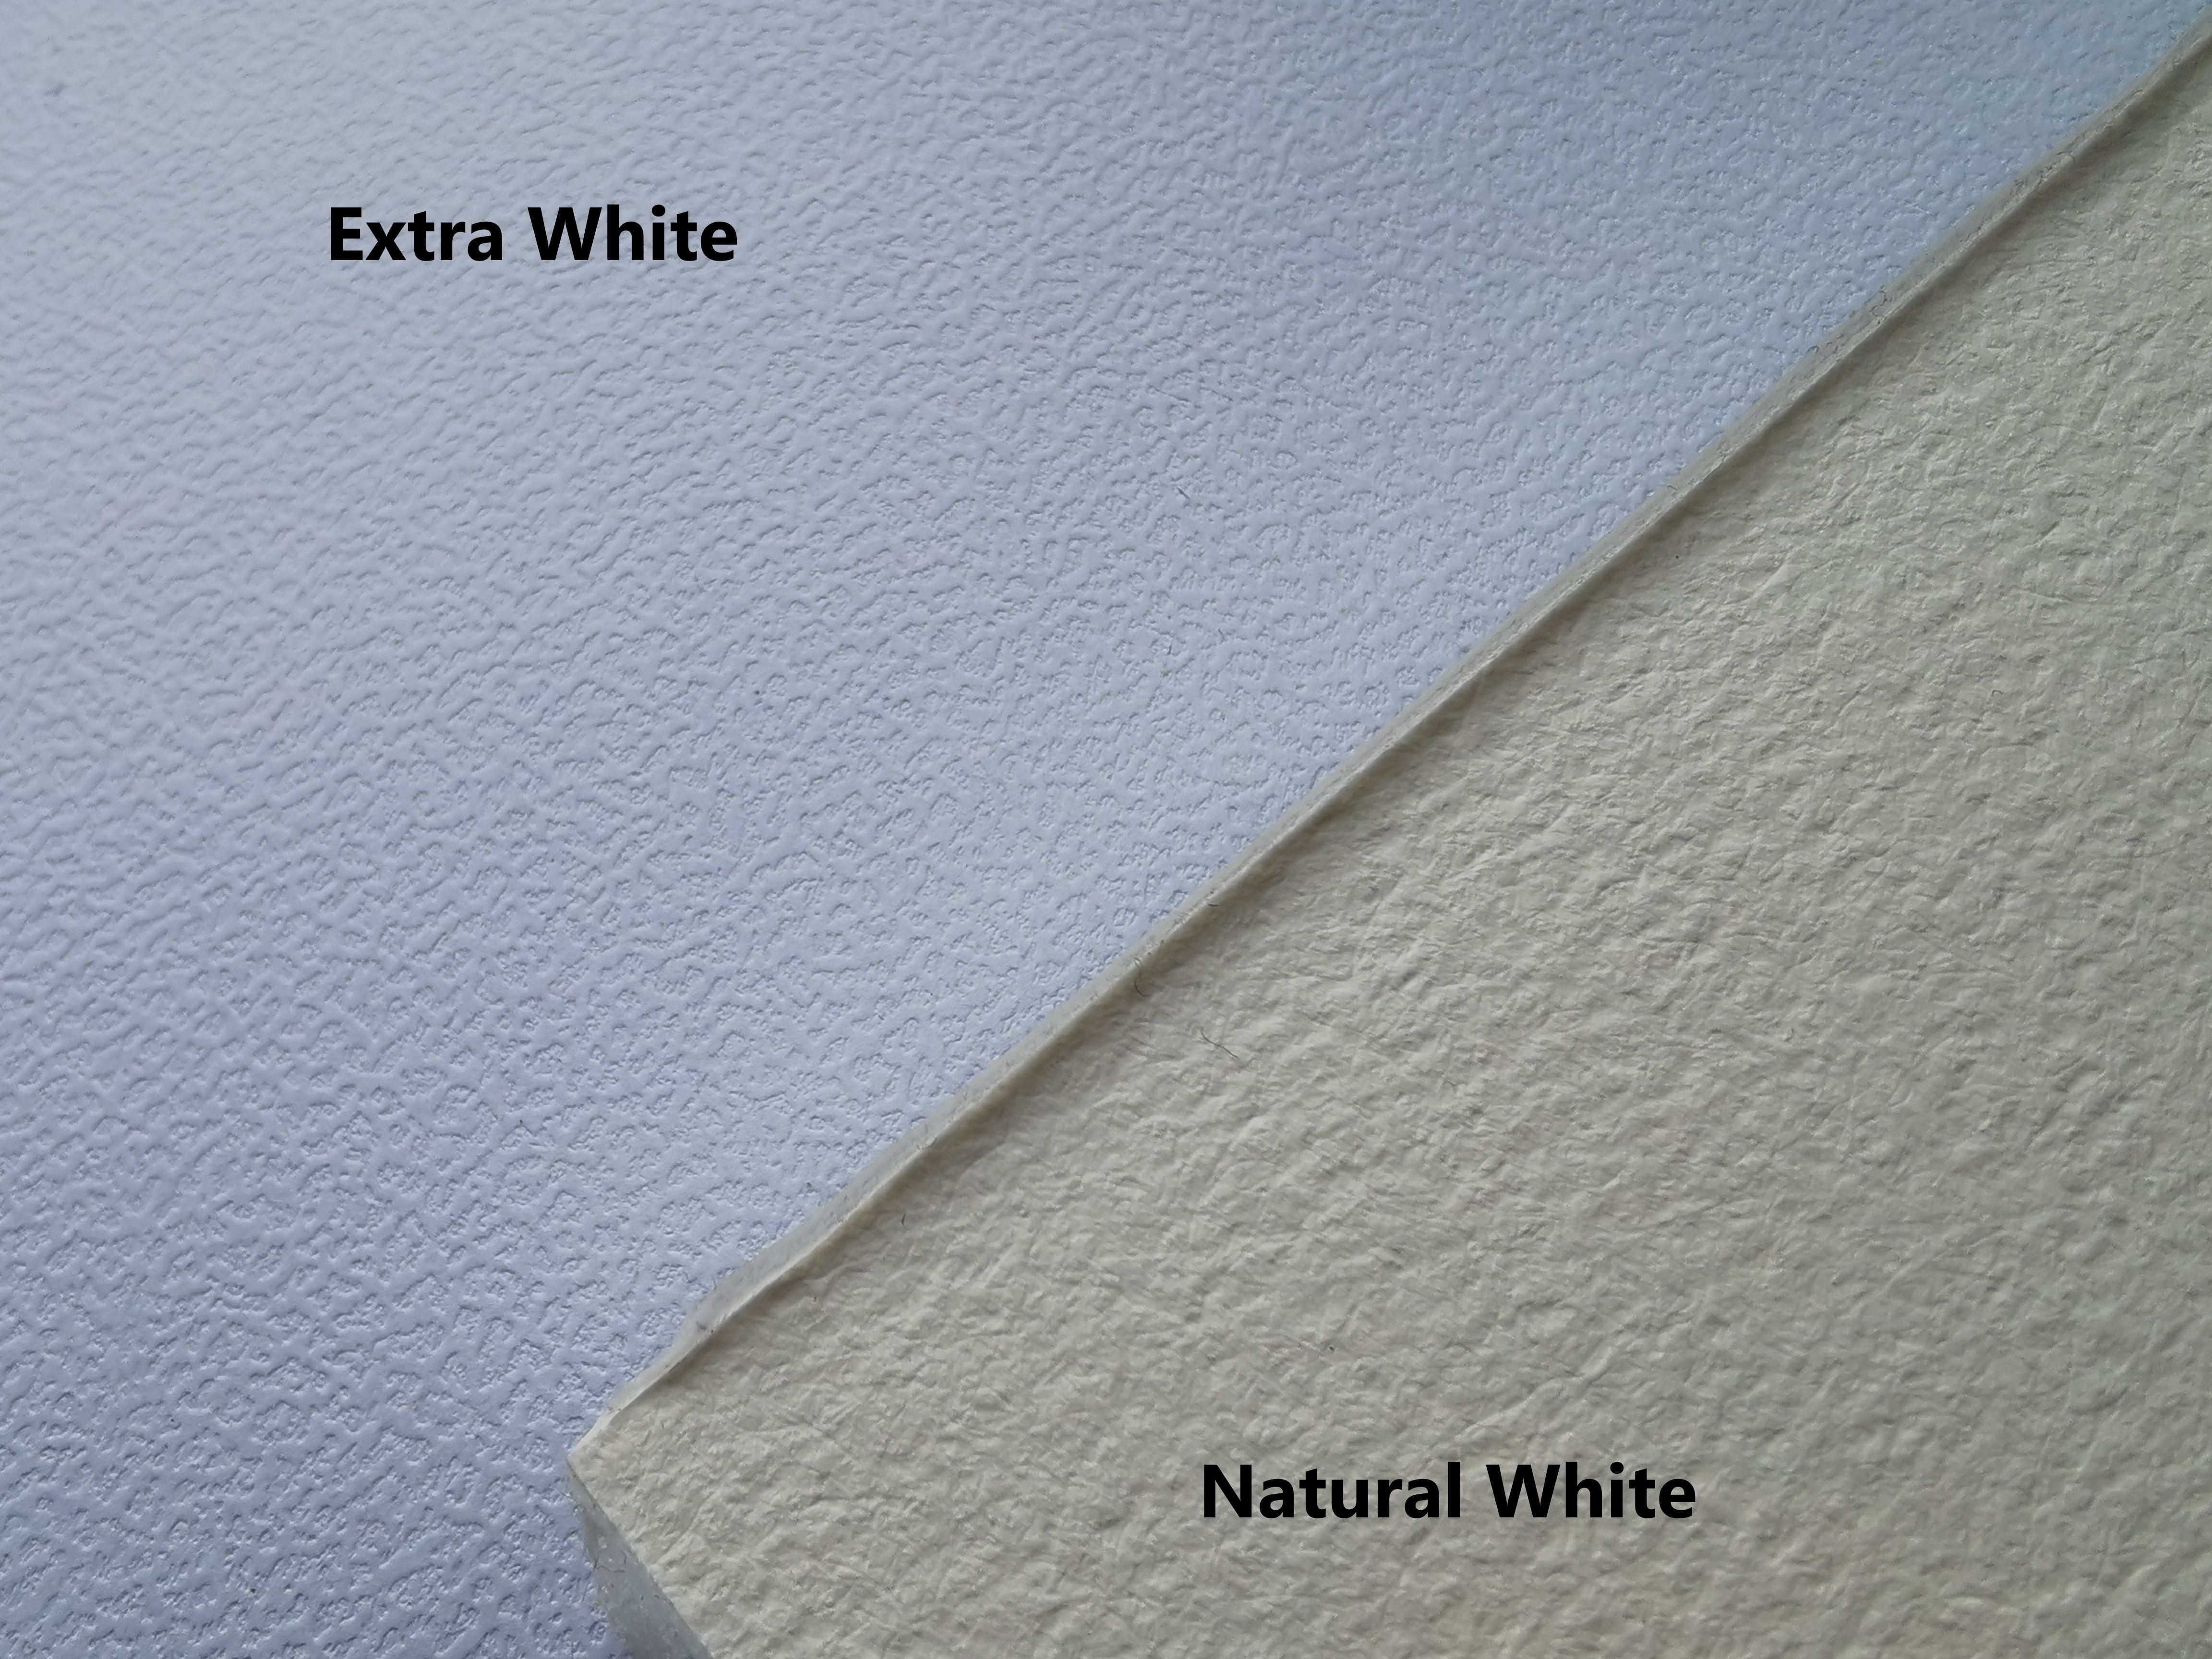 Baohong Natural White vs. Extra White